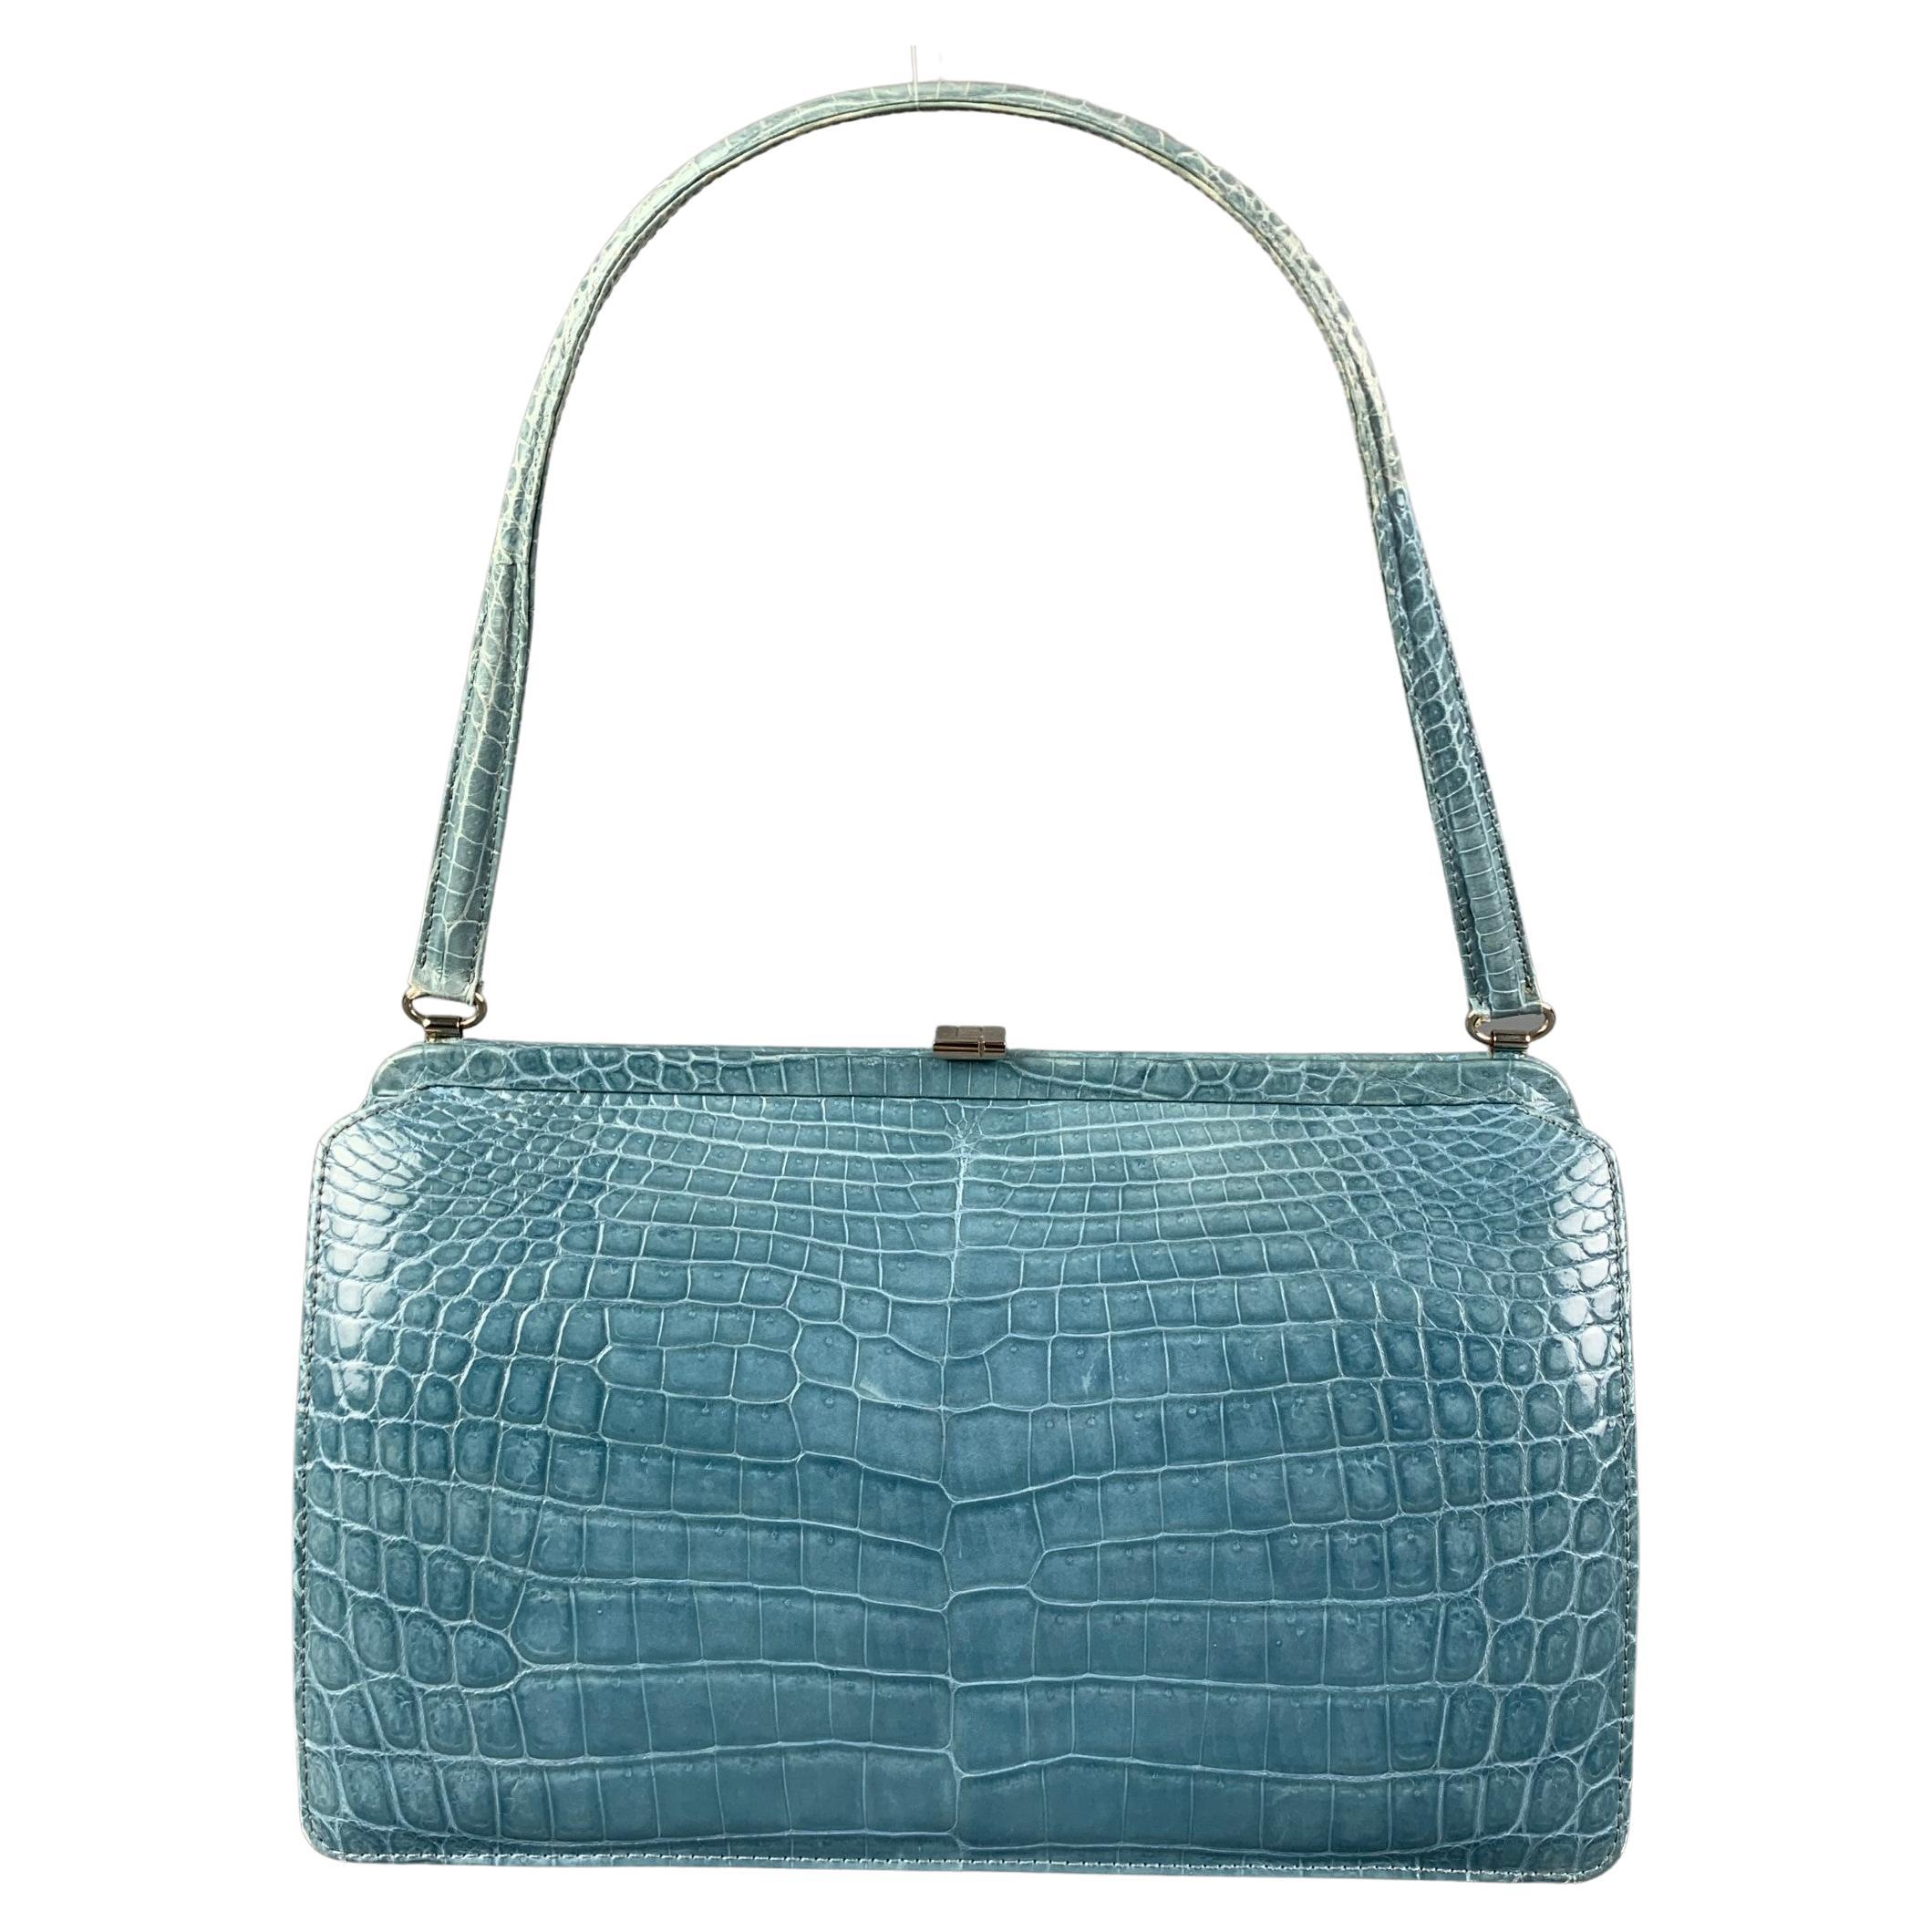 LAMBERTSON TRUEX Blue Alligator Leather Top Handles Handbag